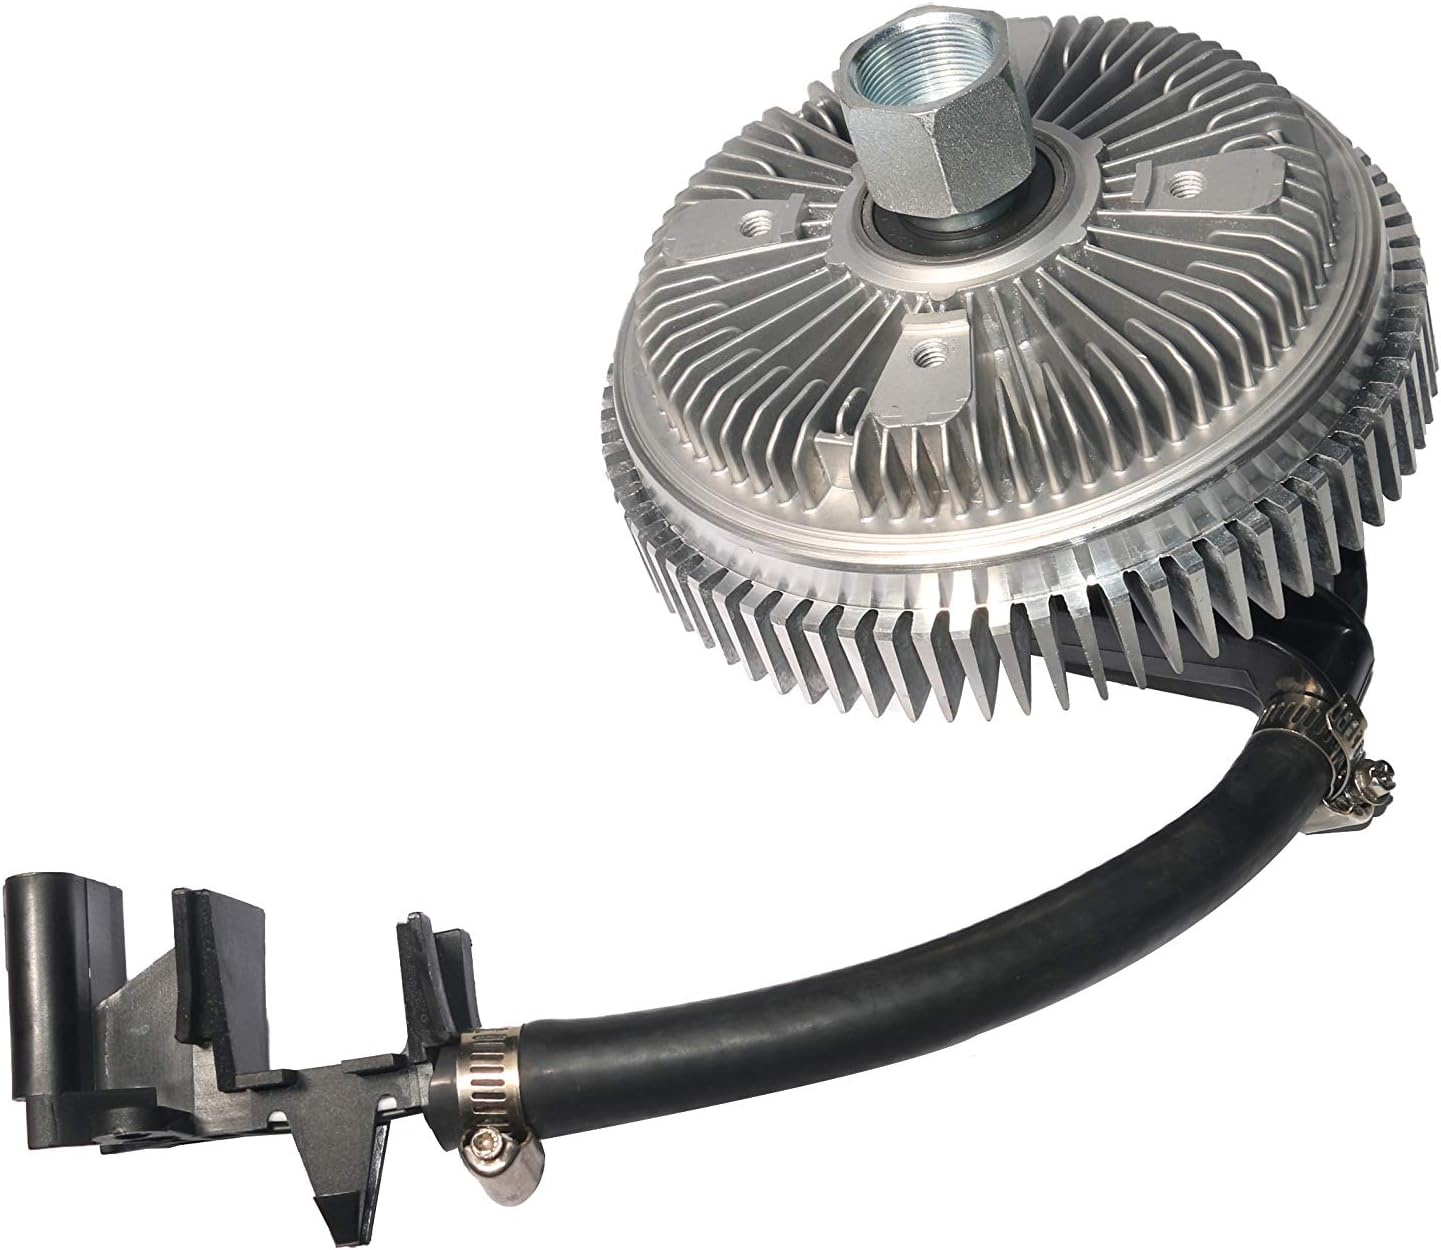 GM OEM-Engine Cooling Radiator Fan Clutch 25790869 